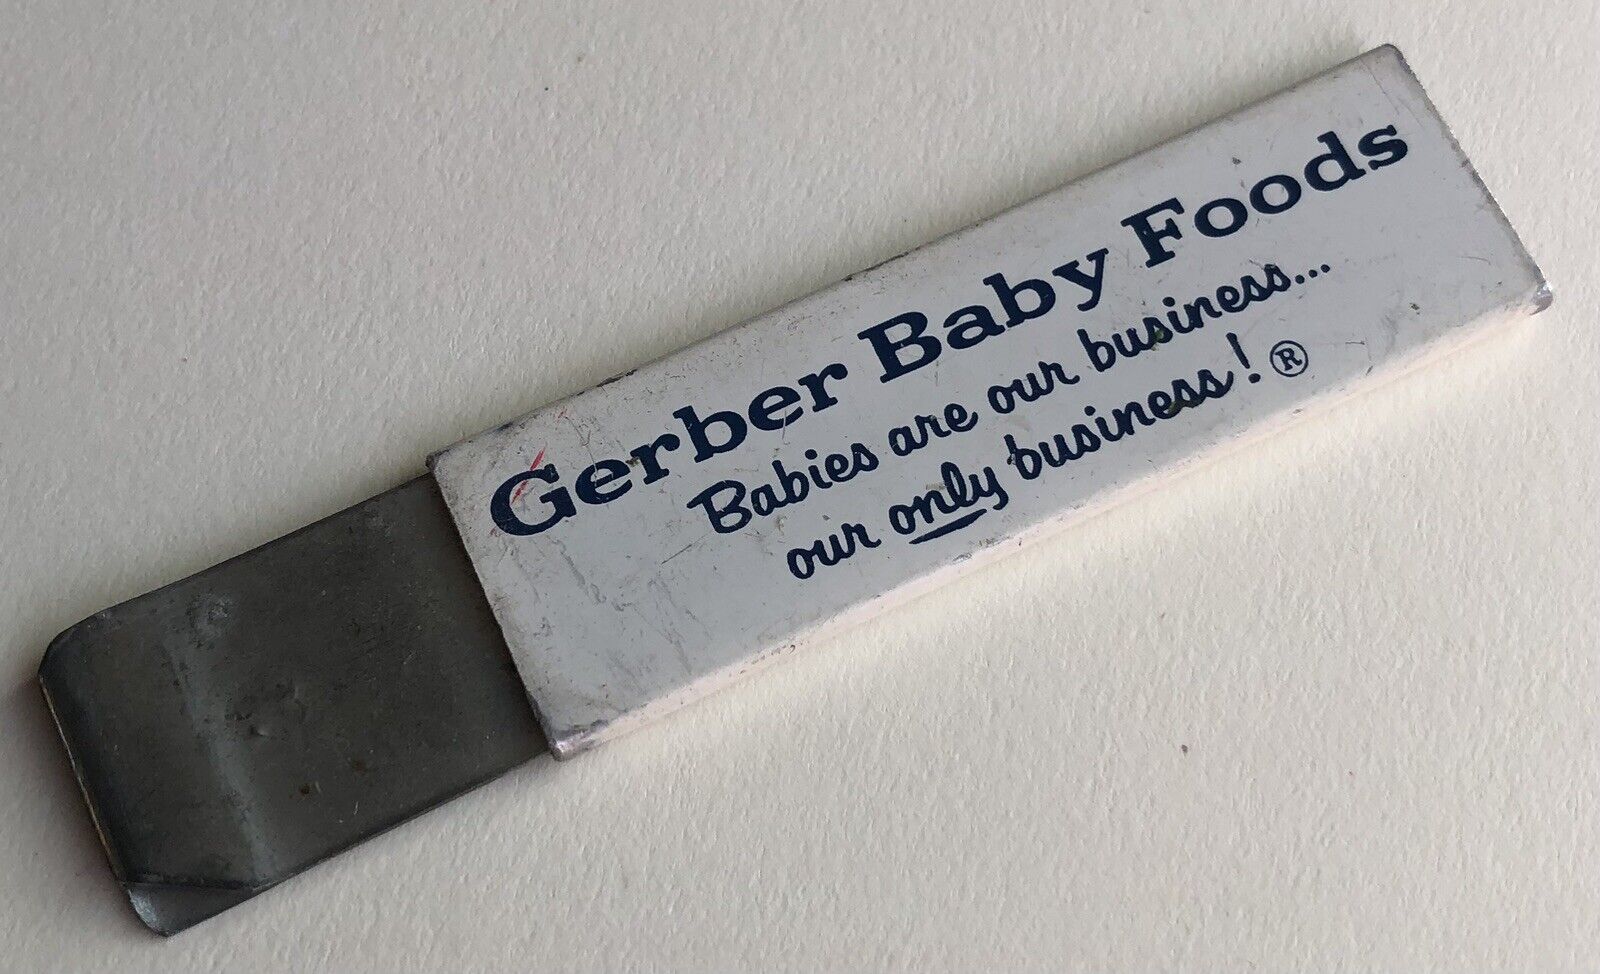 Vintage GERBER BABY FOODS Box Cutter Utility Knife Blade USA